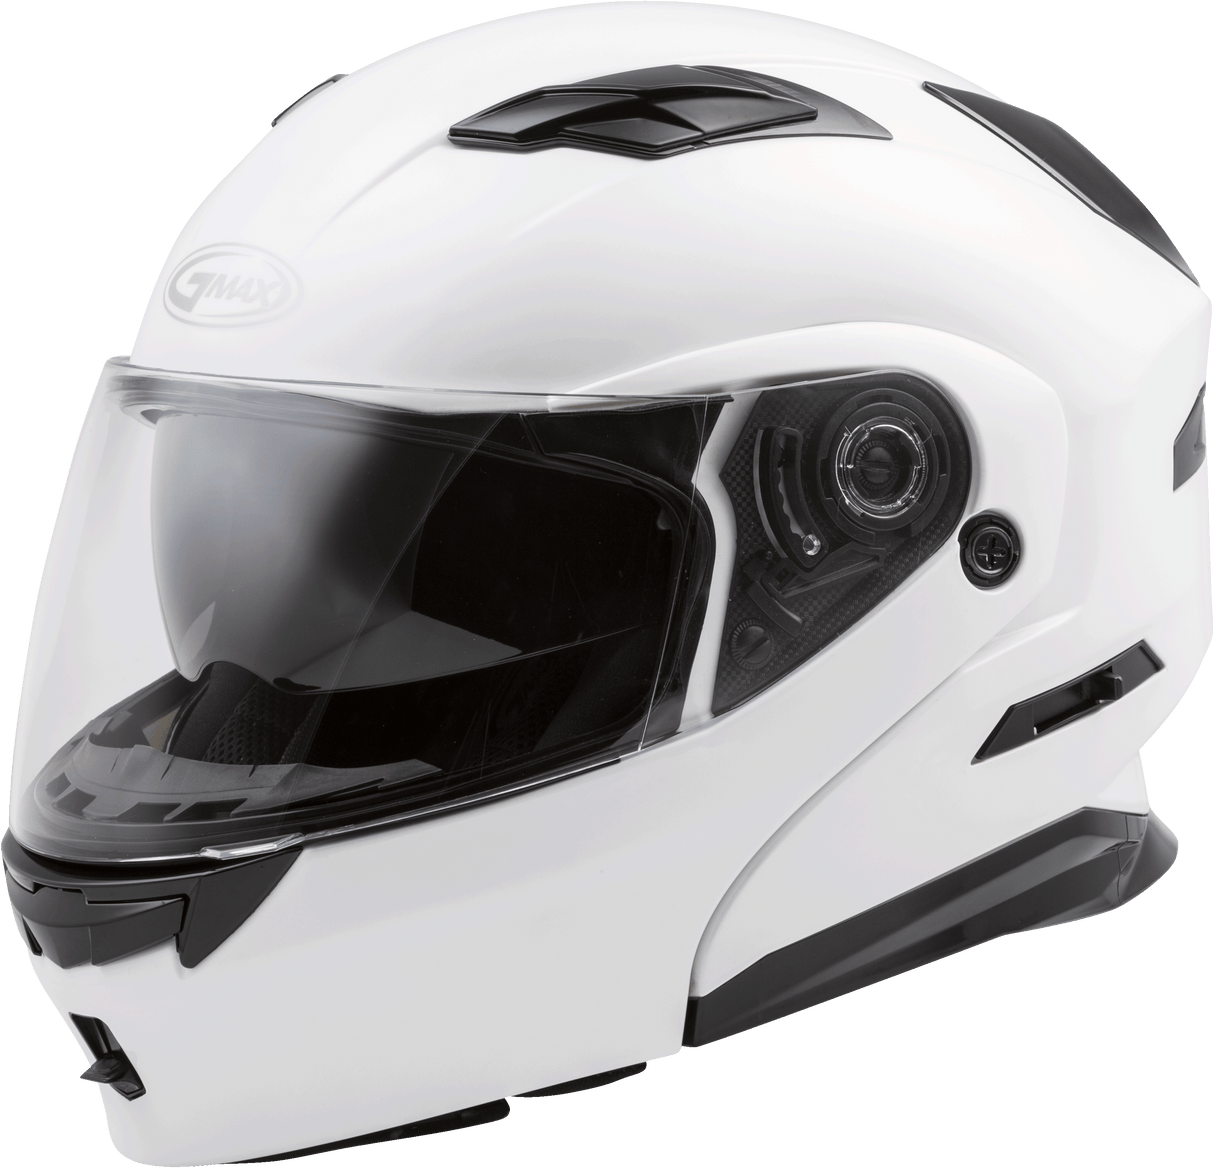 GMAX Md 01 Modular Helmet Pearl White Xl for Powersports